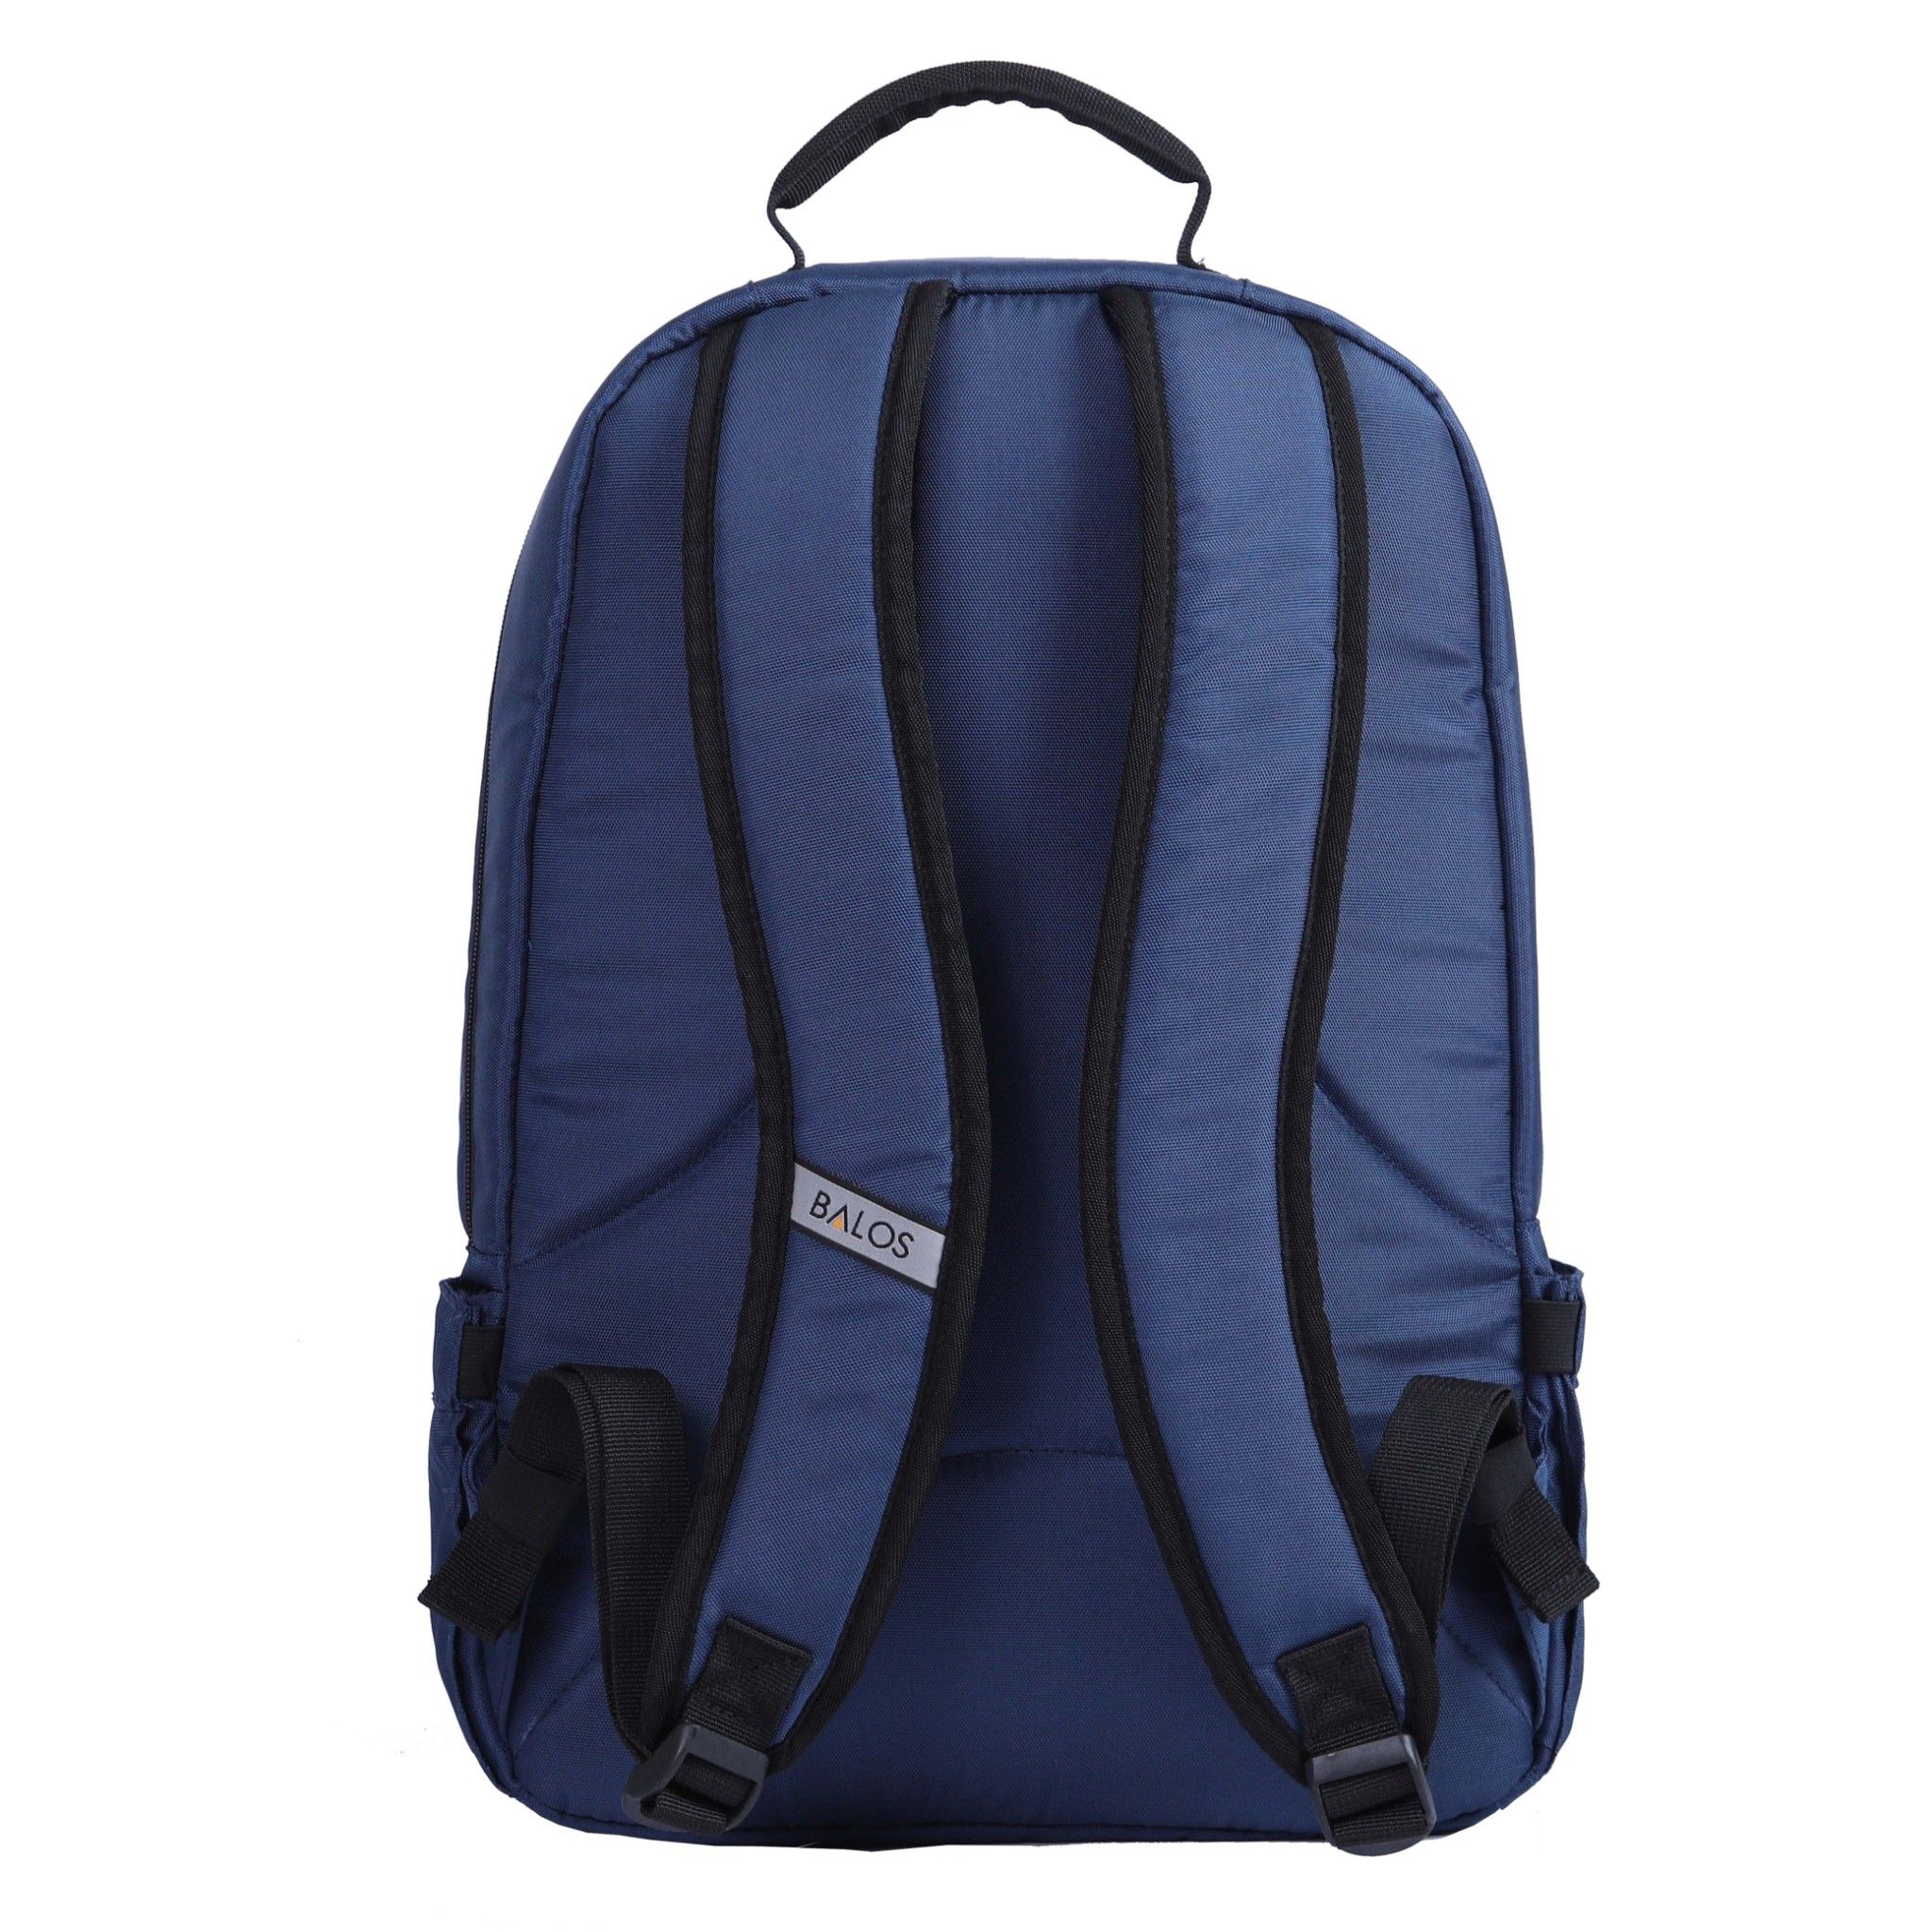  Balos WYNN Navy Backpack - Balo Laptop 15.6 Inch 